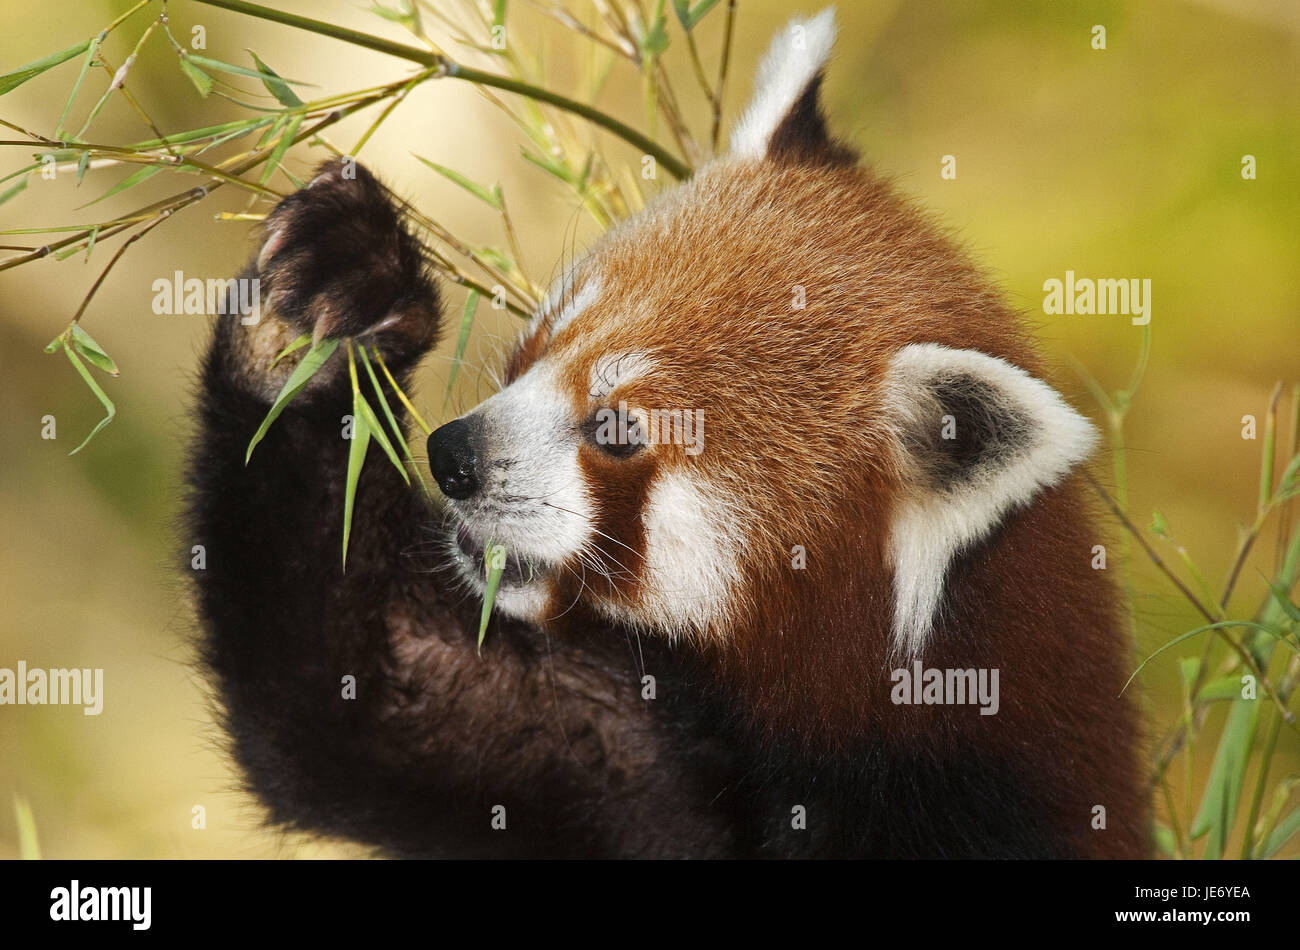 Small panda, Ailurus fulgens, also red panda, adult animal, eat, bamboo, Stock Photo